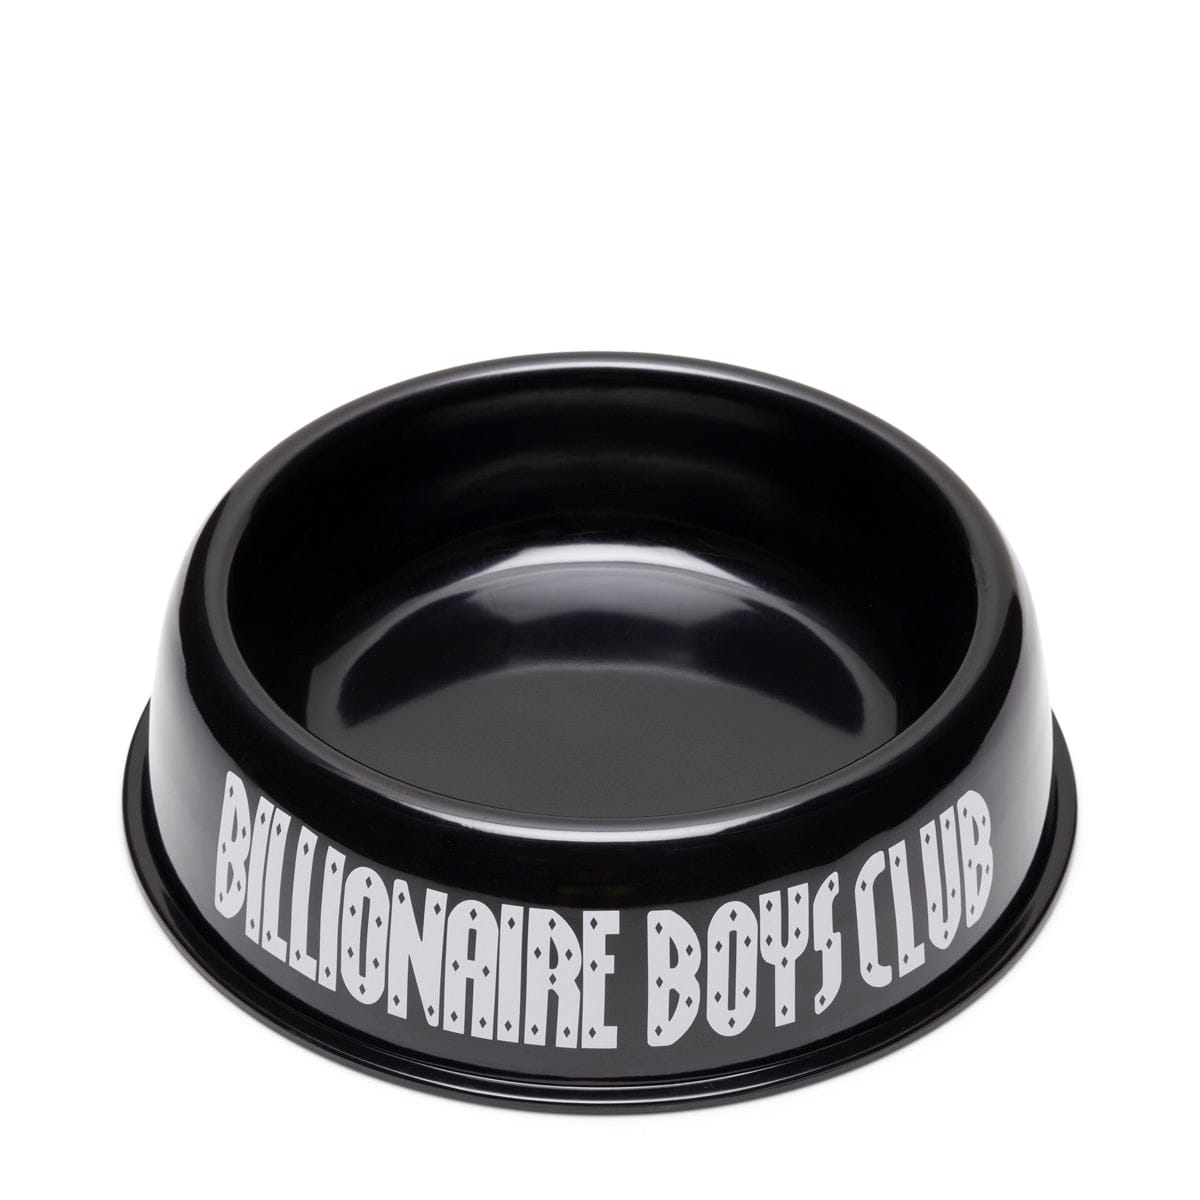 Billionaire Boys Club Odds & Ends BLACK / O/S BARK DOG BOWL